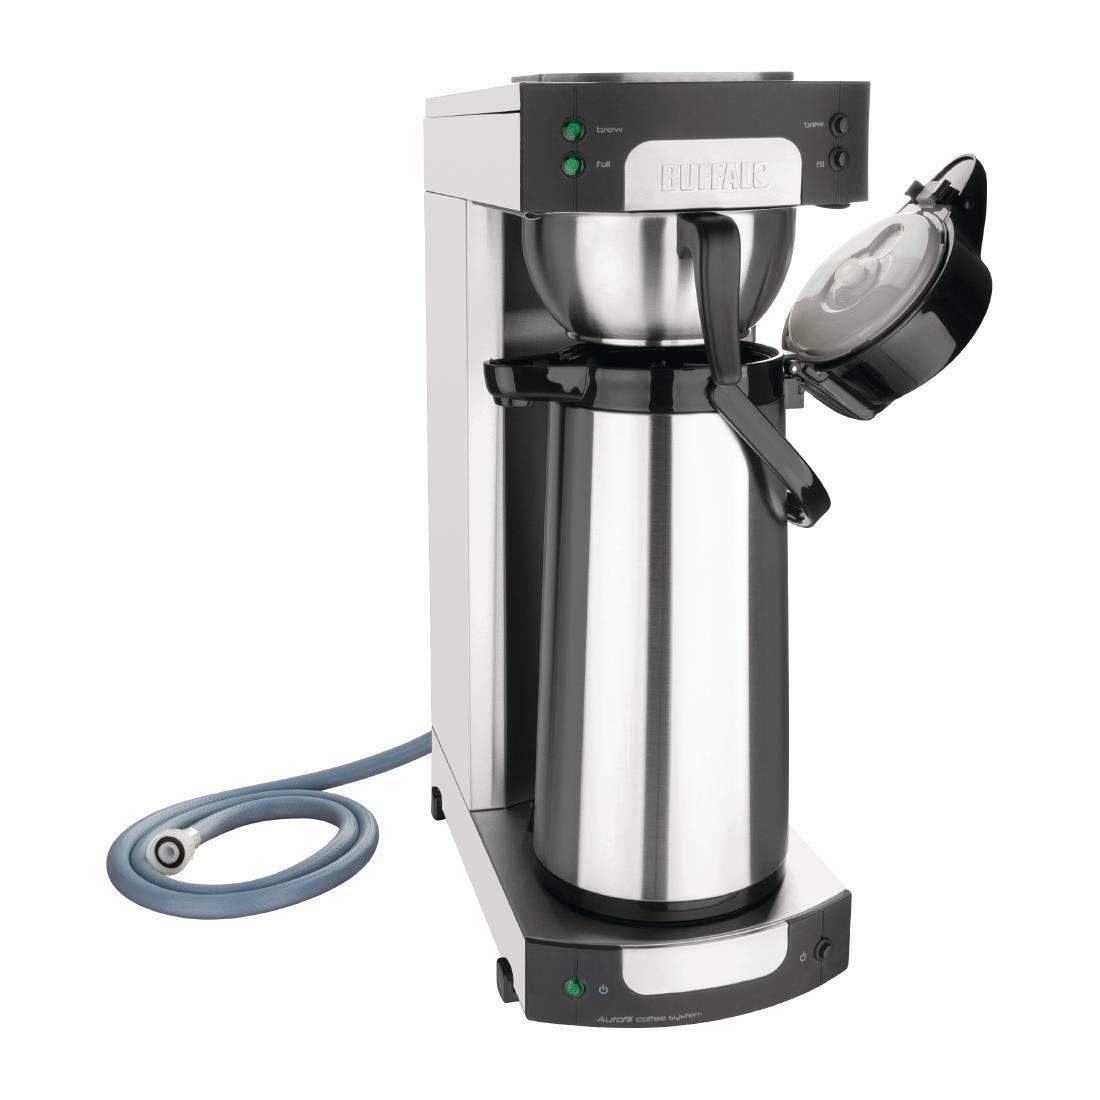 Buffalo Airpot Filter Coffee Maker - CW306  - 1